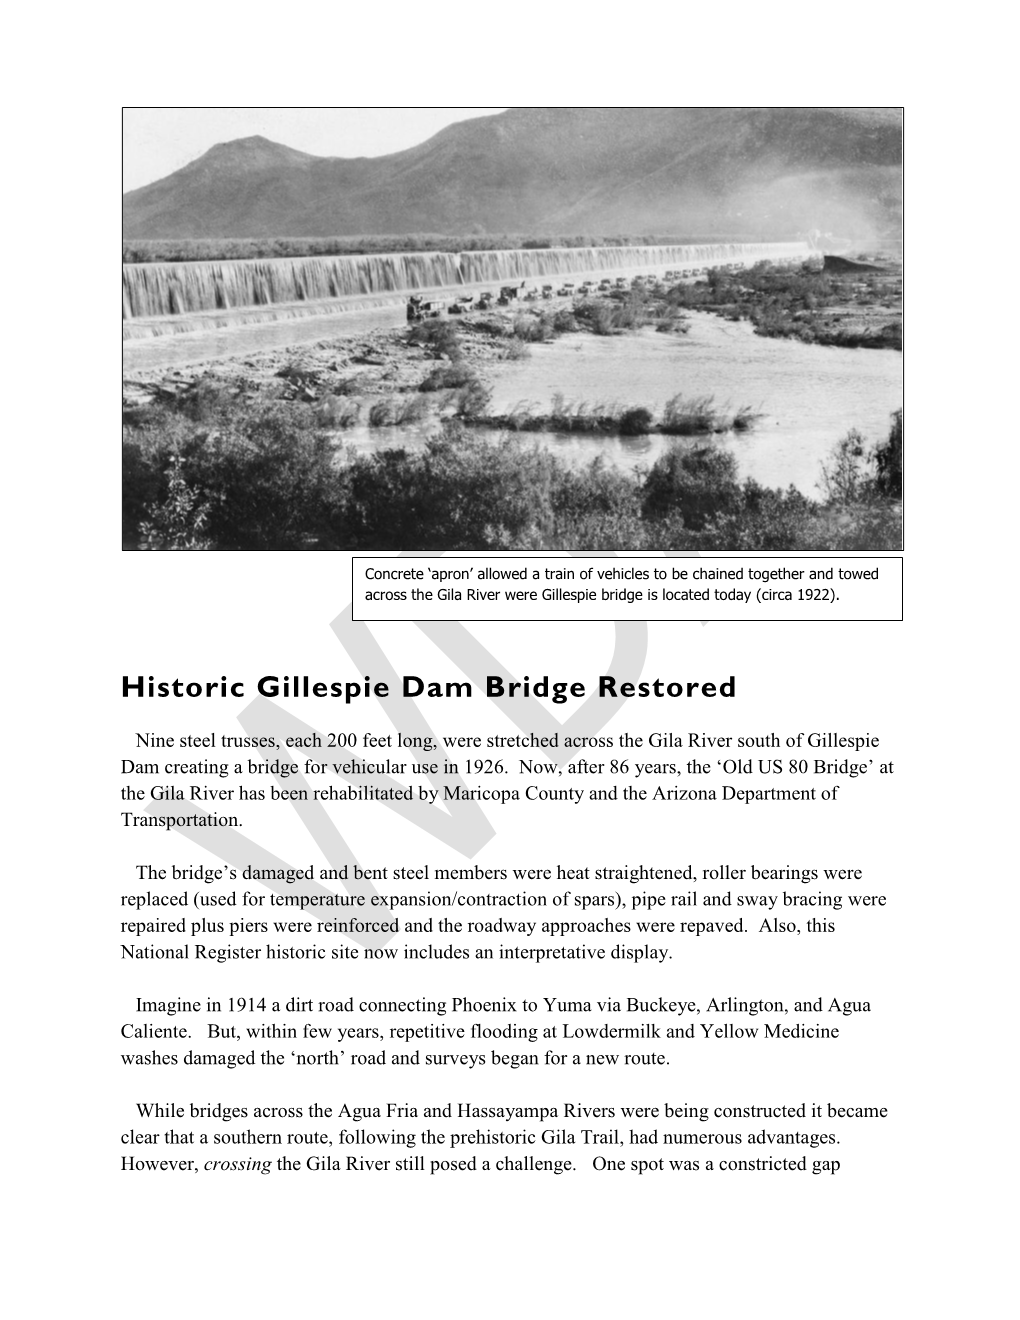 Gillespie Dam Bridge History